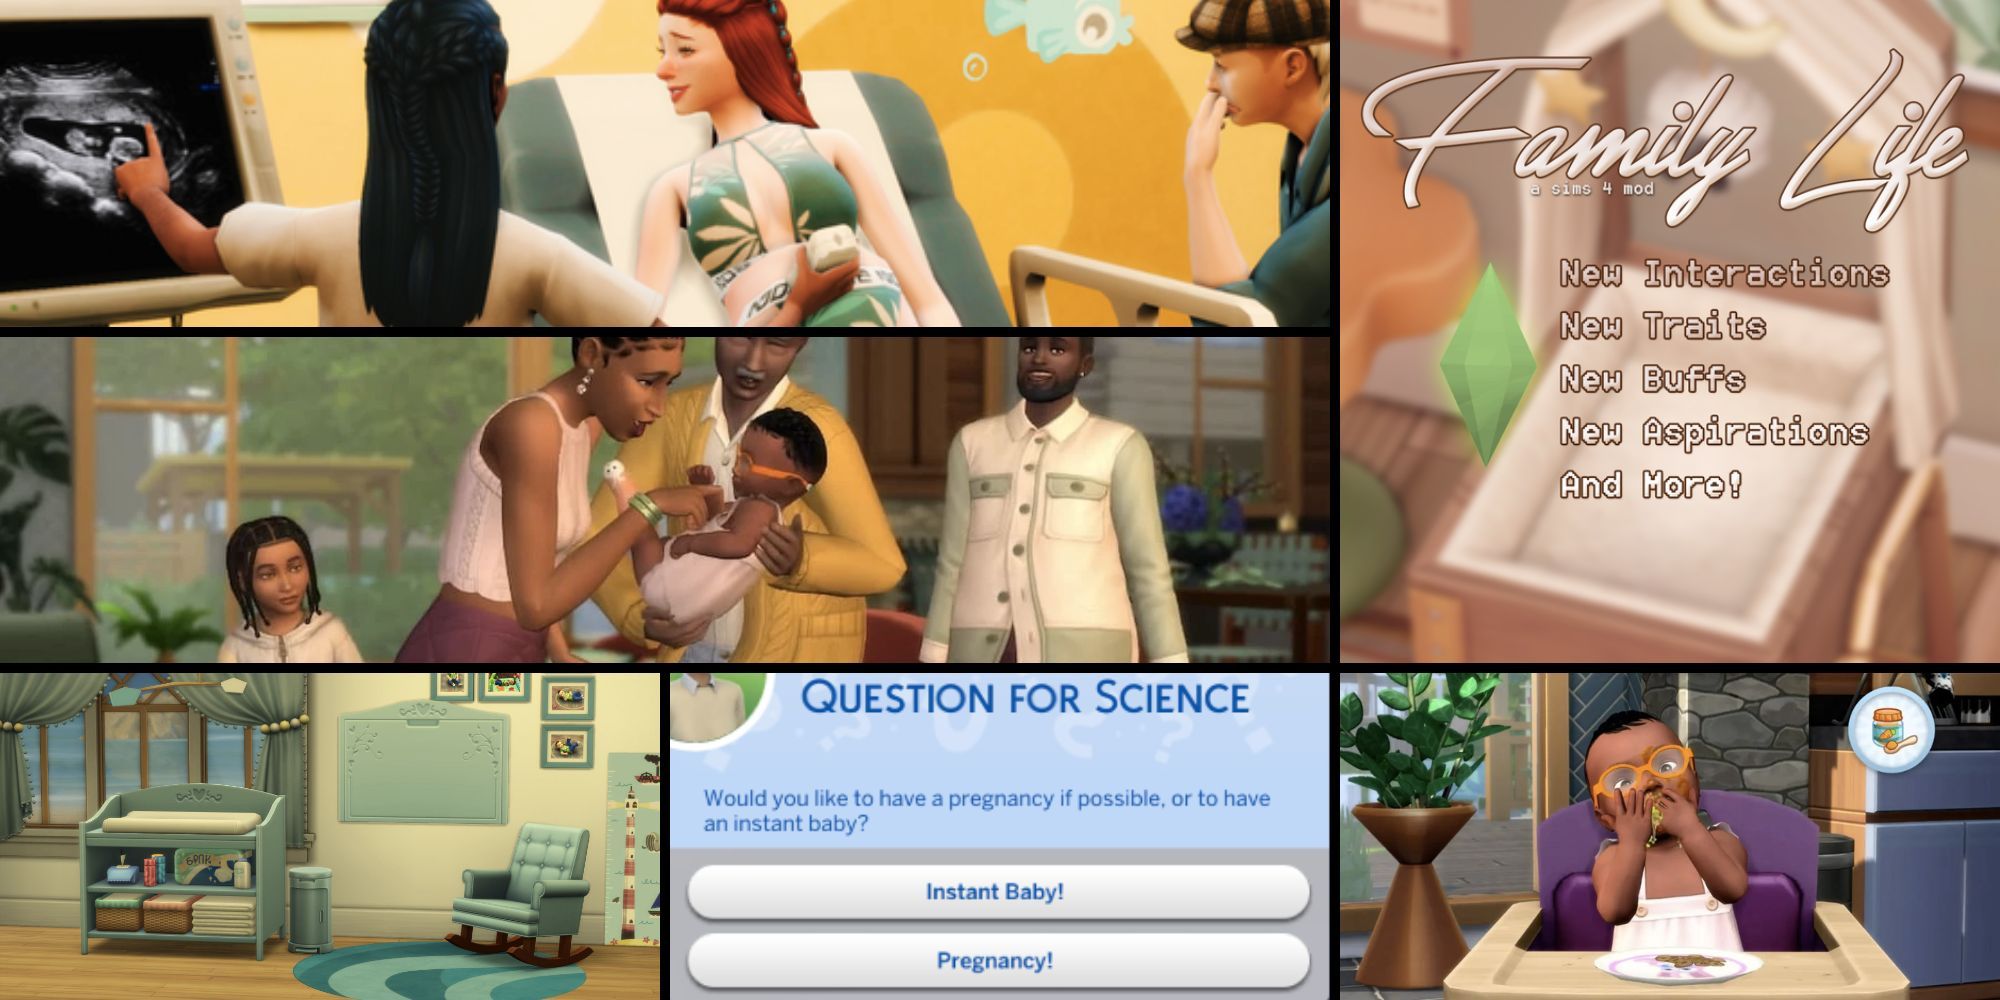 Mod The Sims - Photography Aspiration